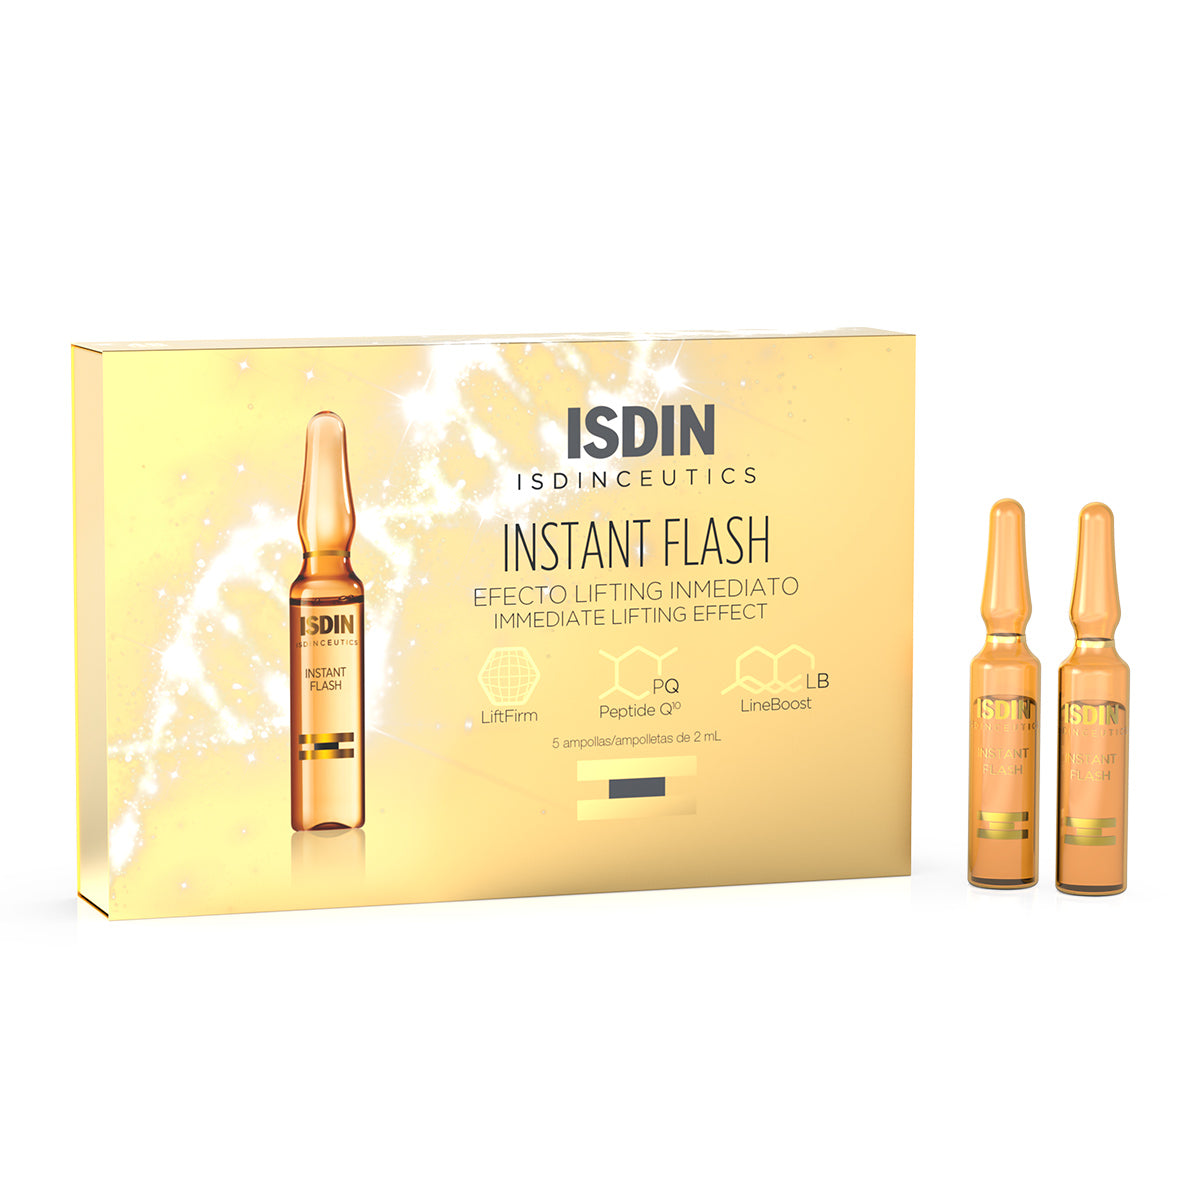 Isdin Isdinceutics Instant Flash, efecto lifting inmediato c/5 ampolle –  Derma Express MX